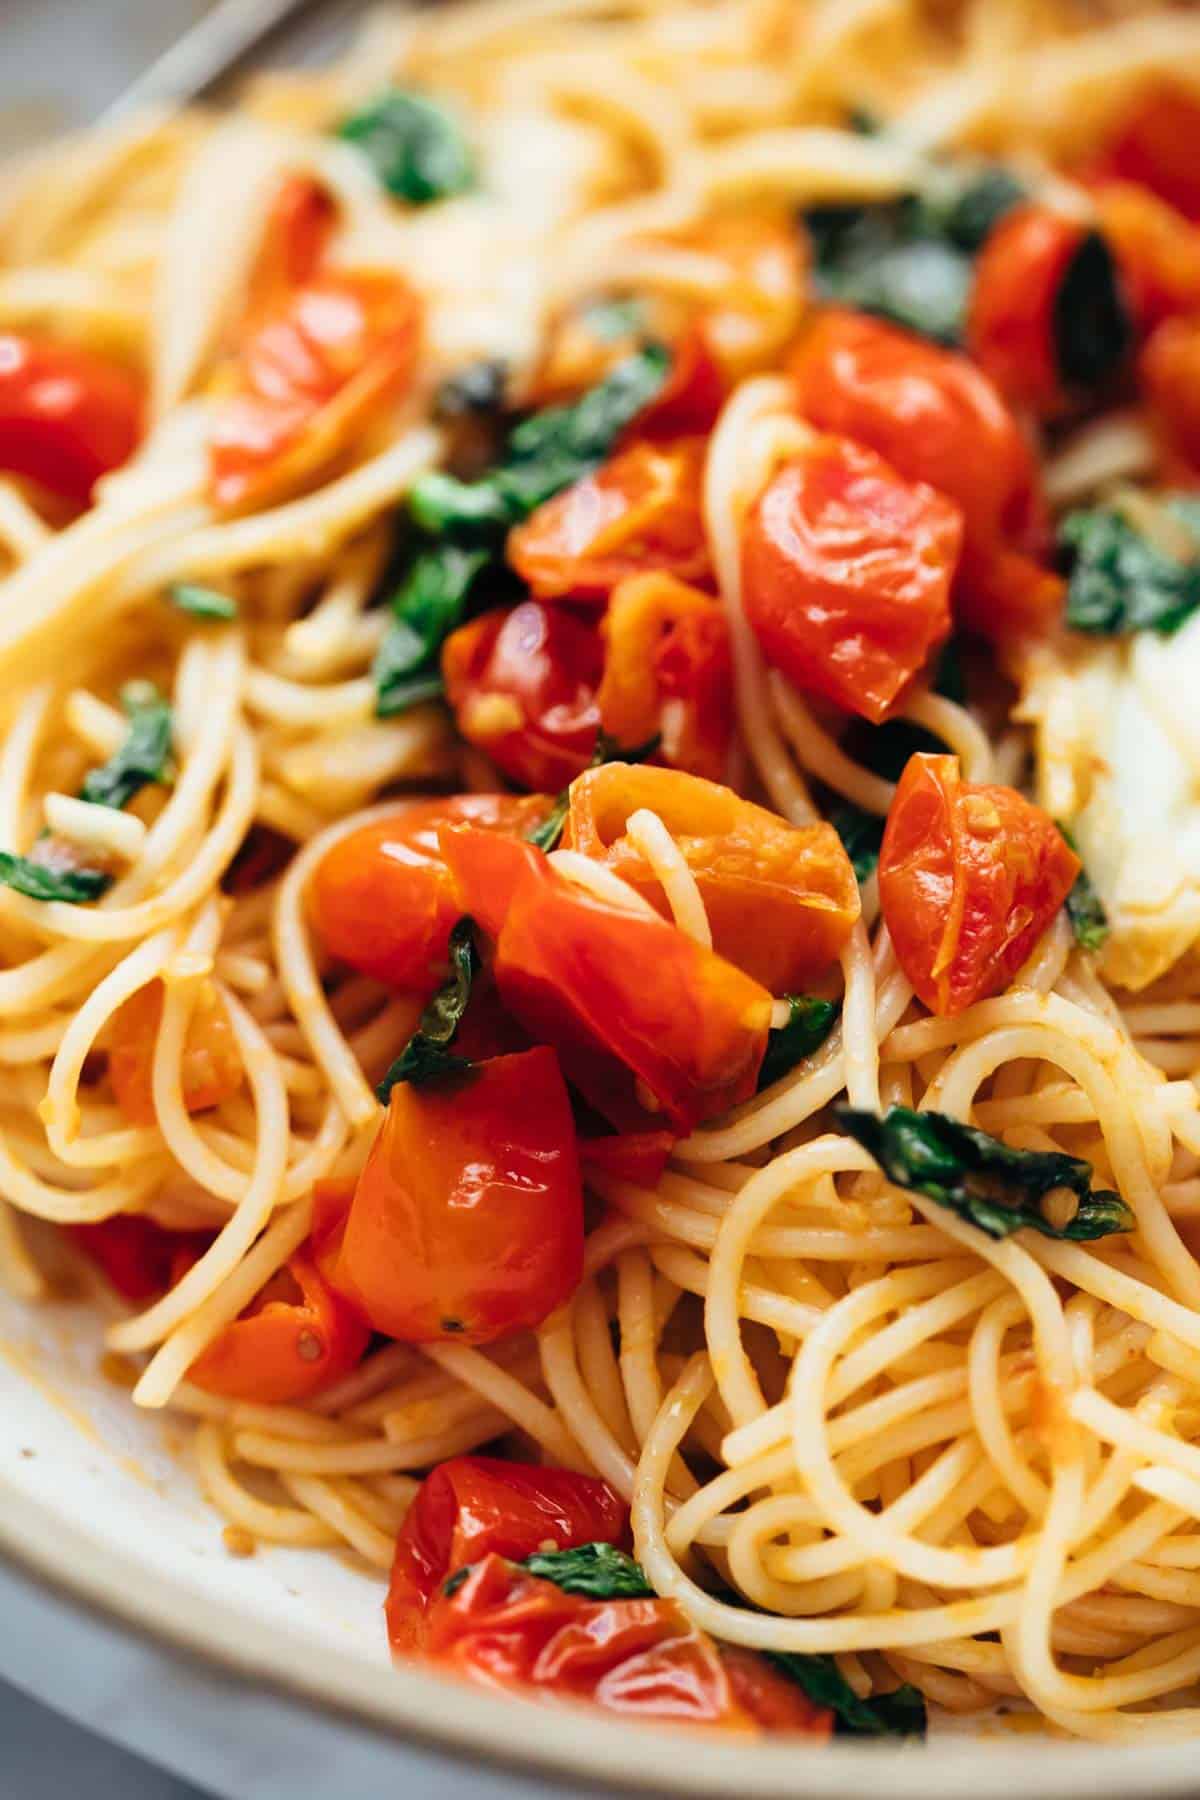 Tomato Basil Pasta with text overlay.